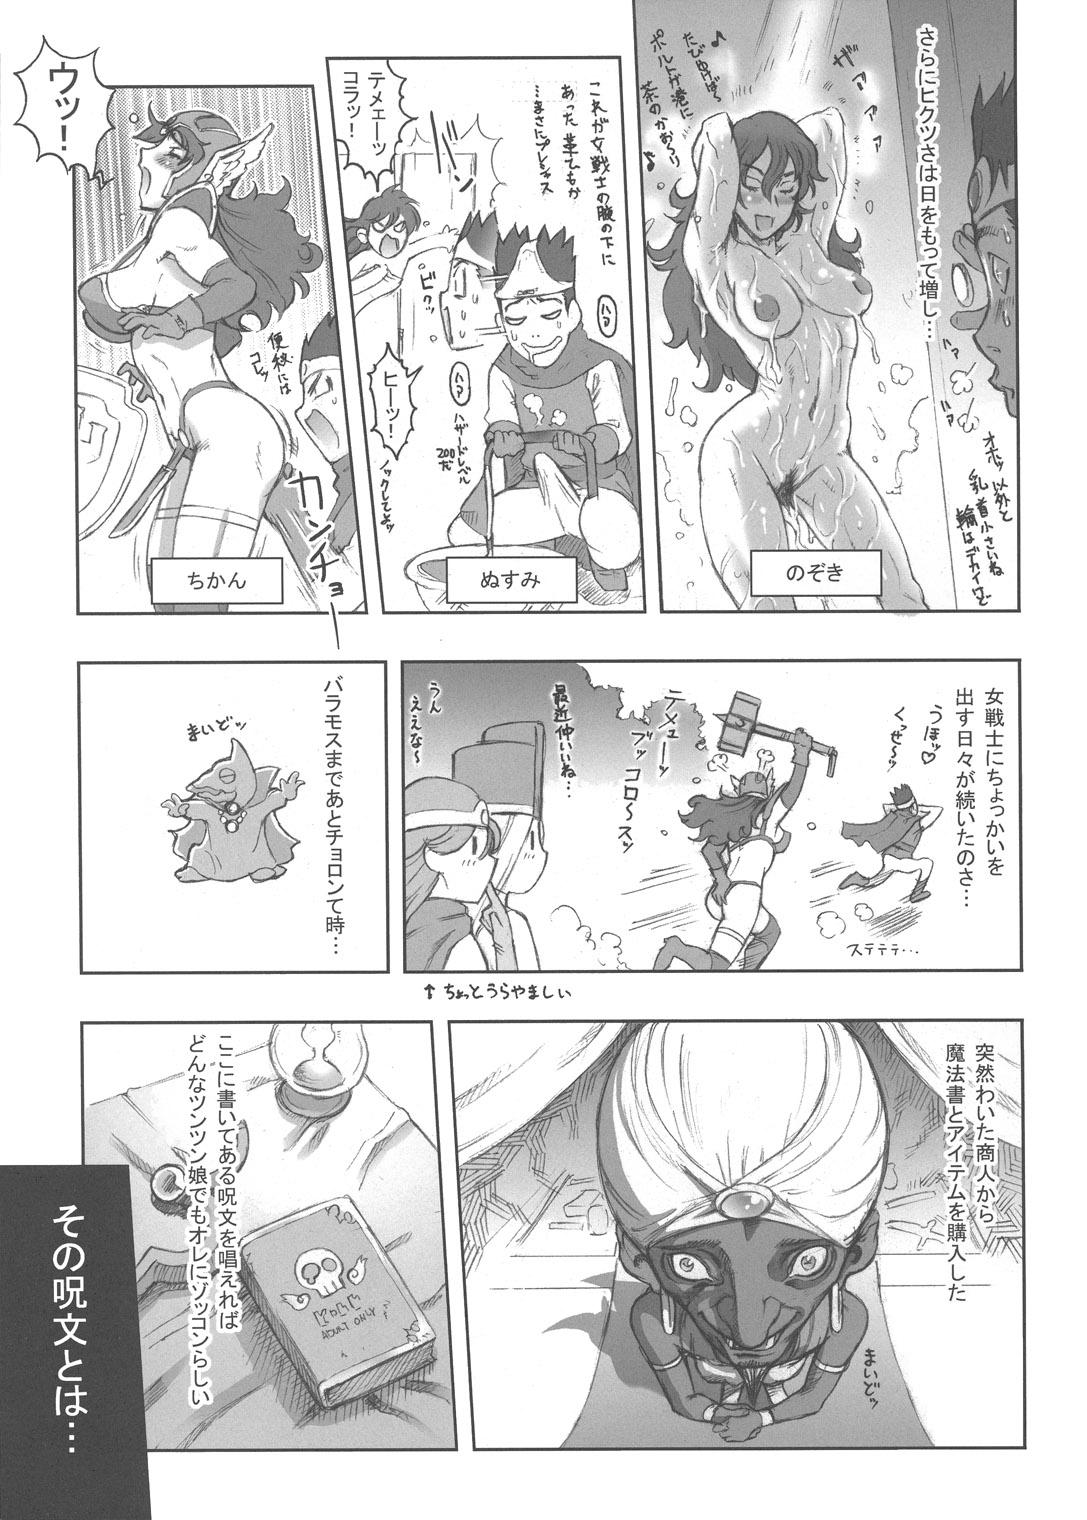 Pornstar Nippon Onna Heroine 3 - Sailor moon Dragon quest iii Periscope - Page 6